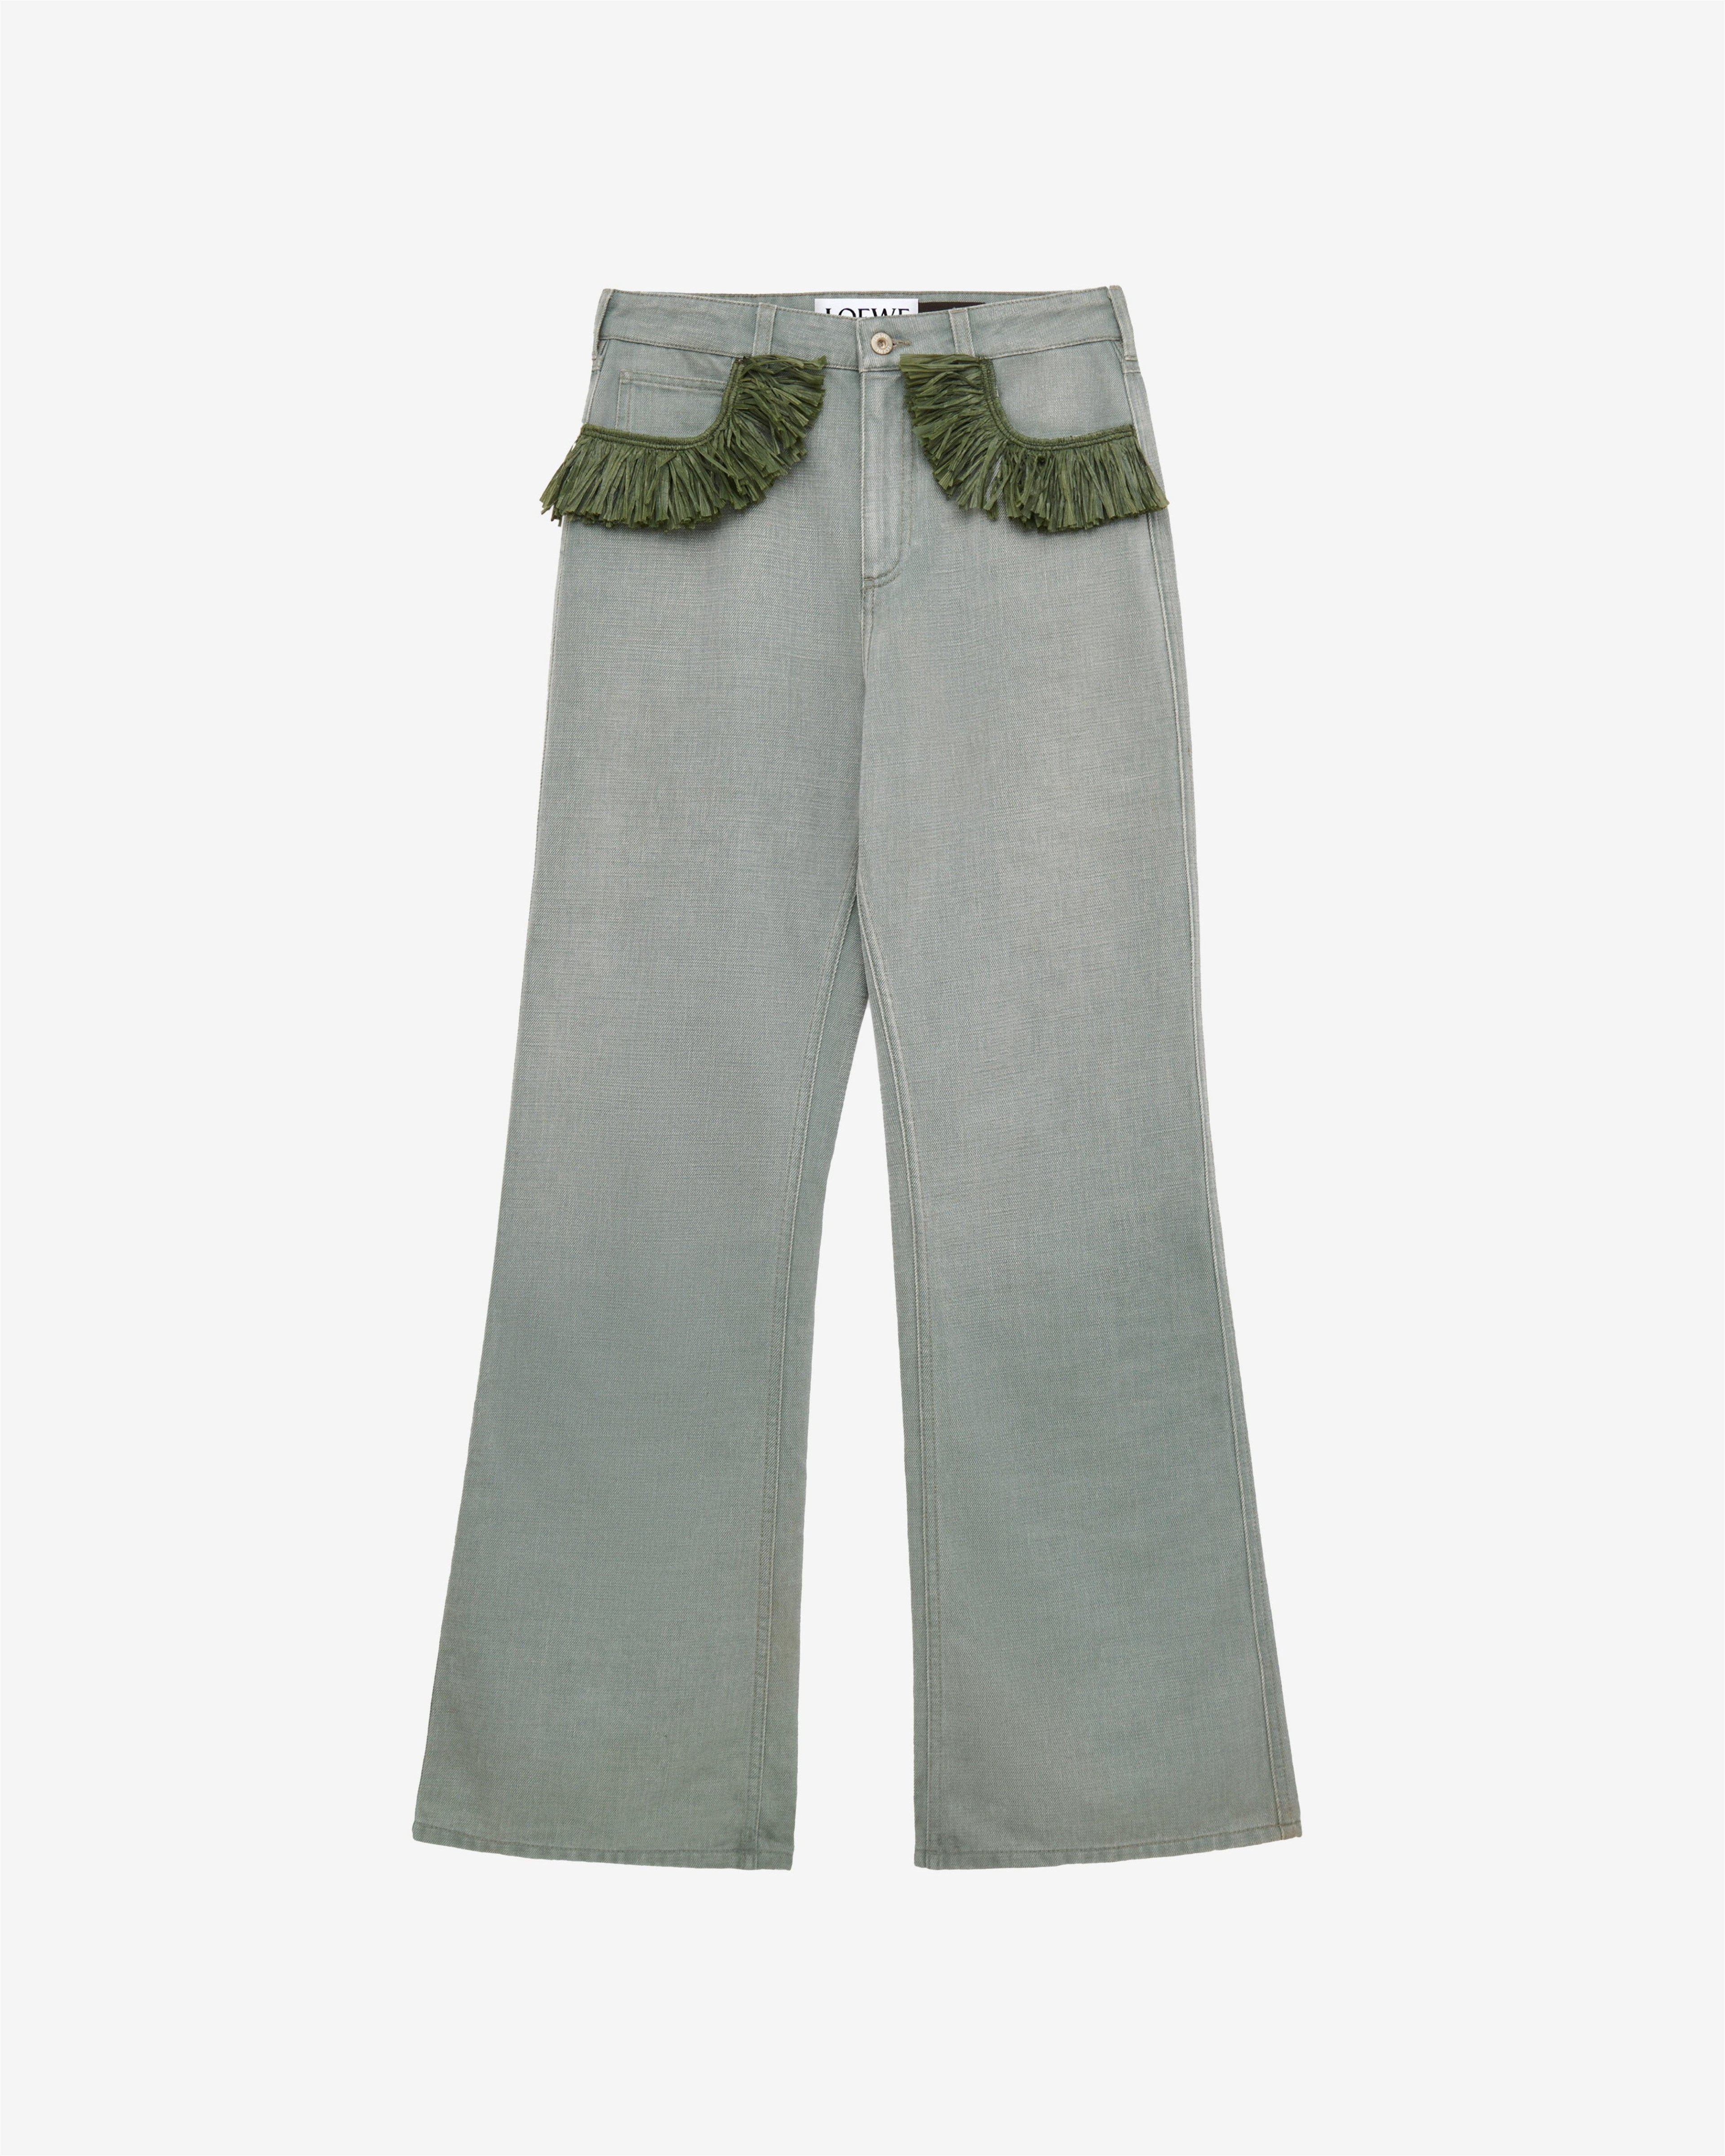 Loewe - Women's Bootleg Jeans - (Khaki Green) by LOEWE